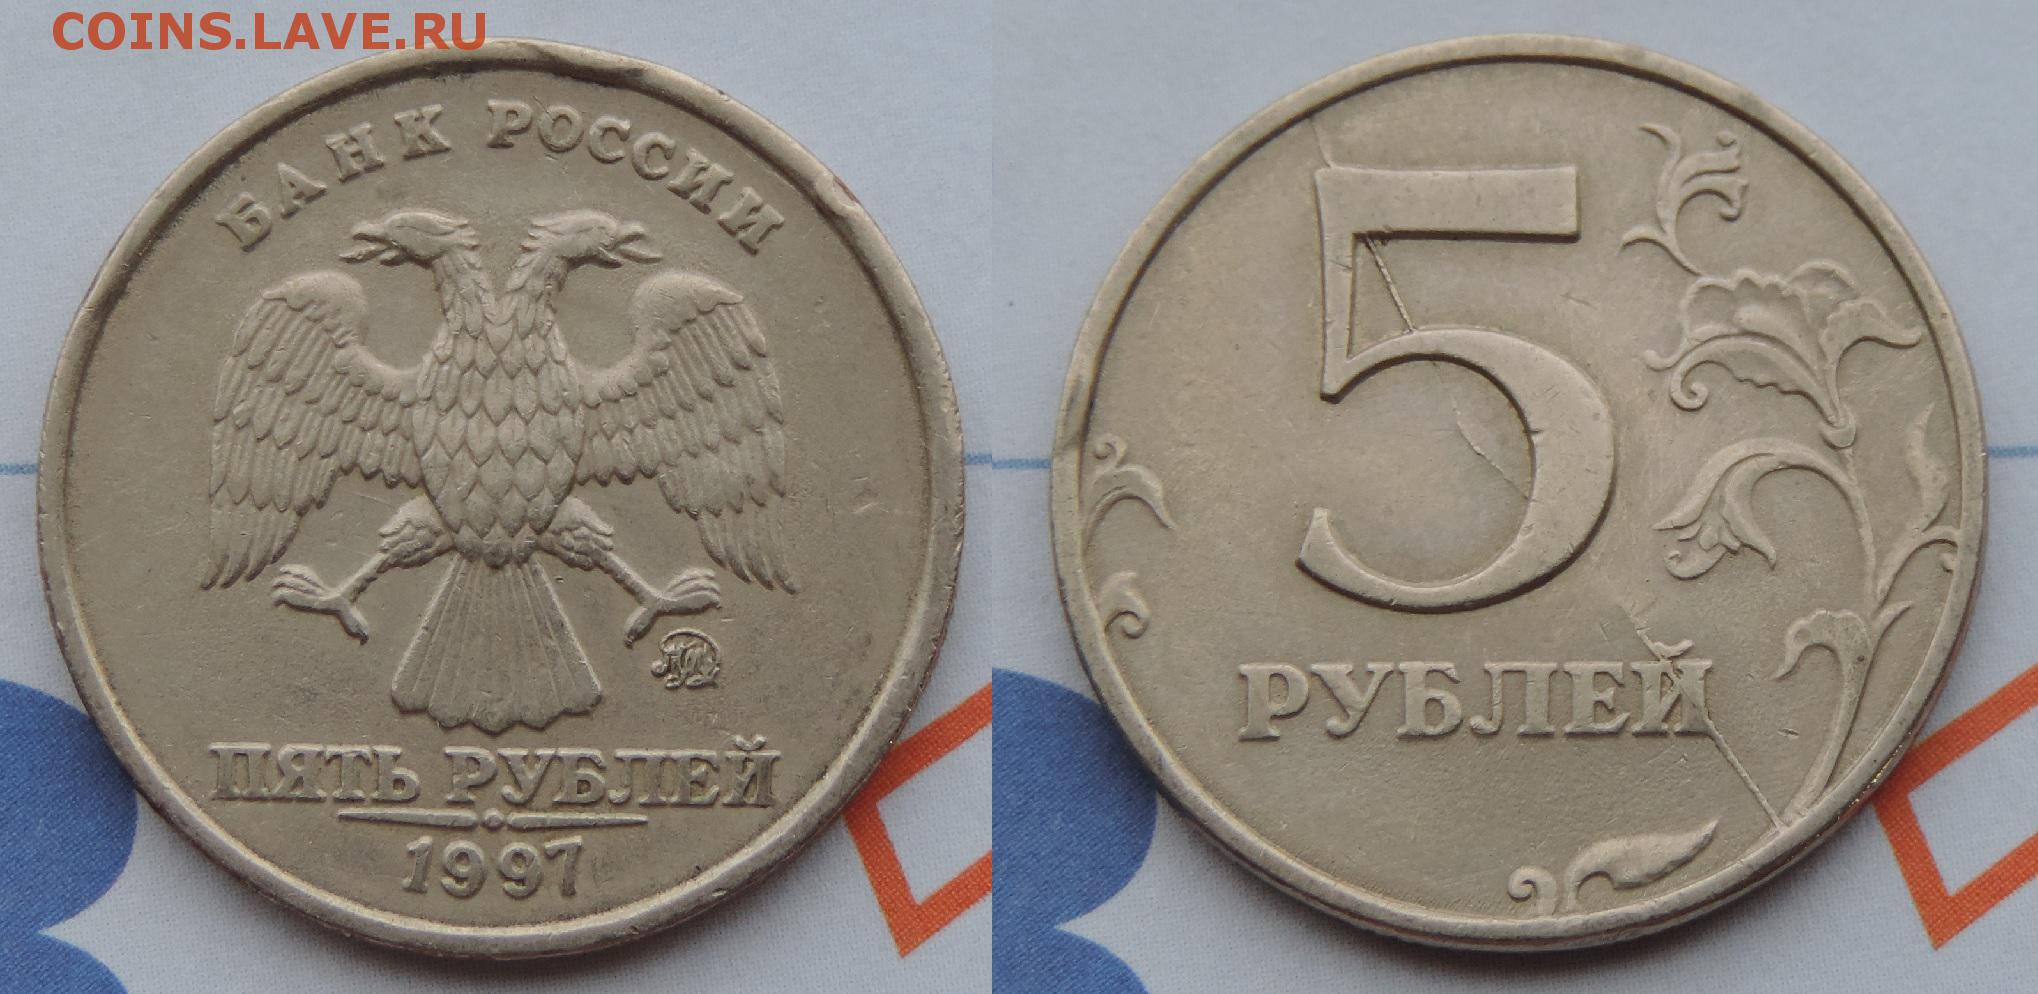 5 рублей 1997 разновидности